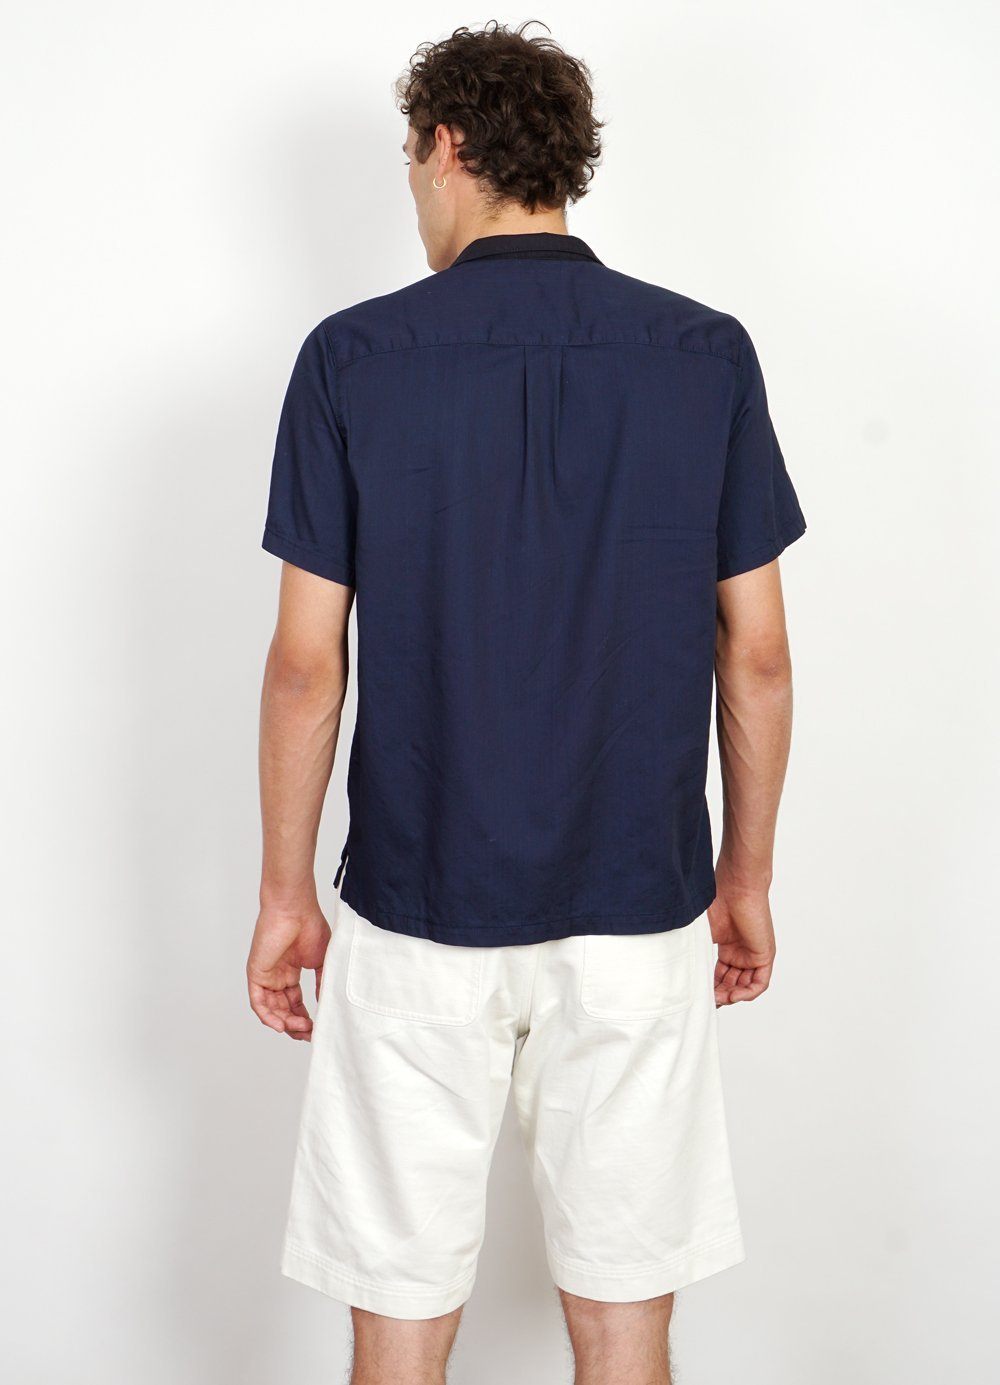 PHILLIP | Short Sleeve Pull-On Shirt | Indigo -HANSEN Garments- HANSEN Garments